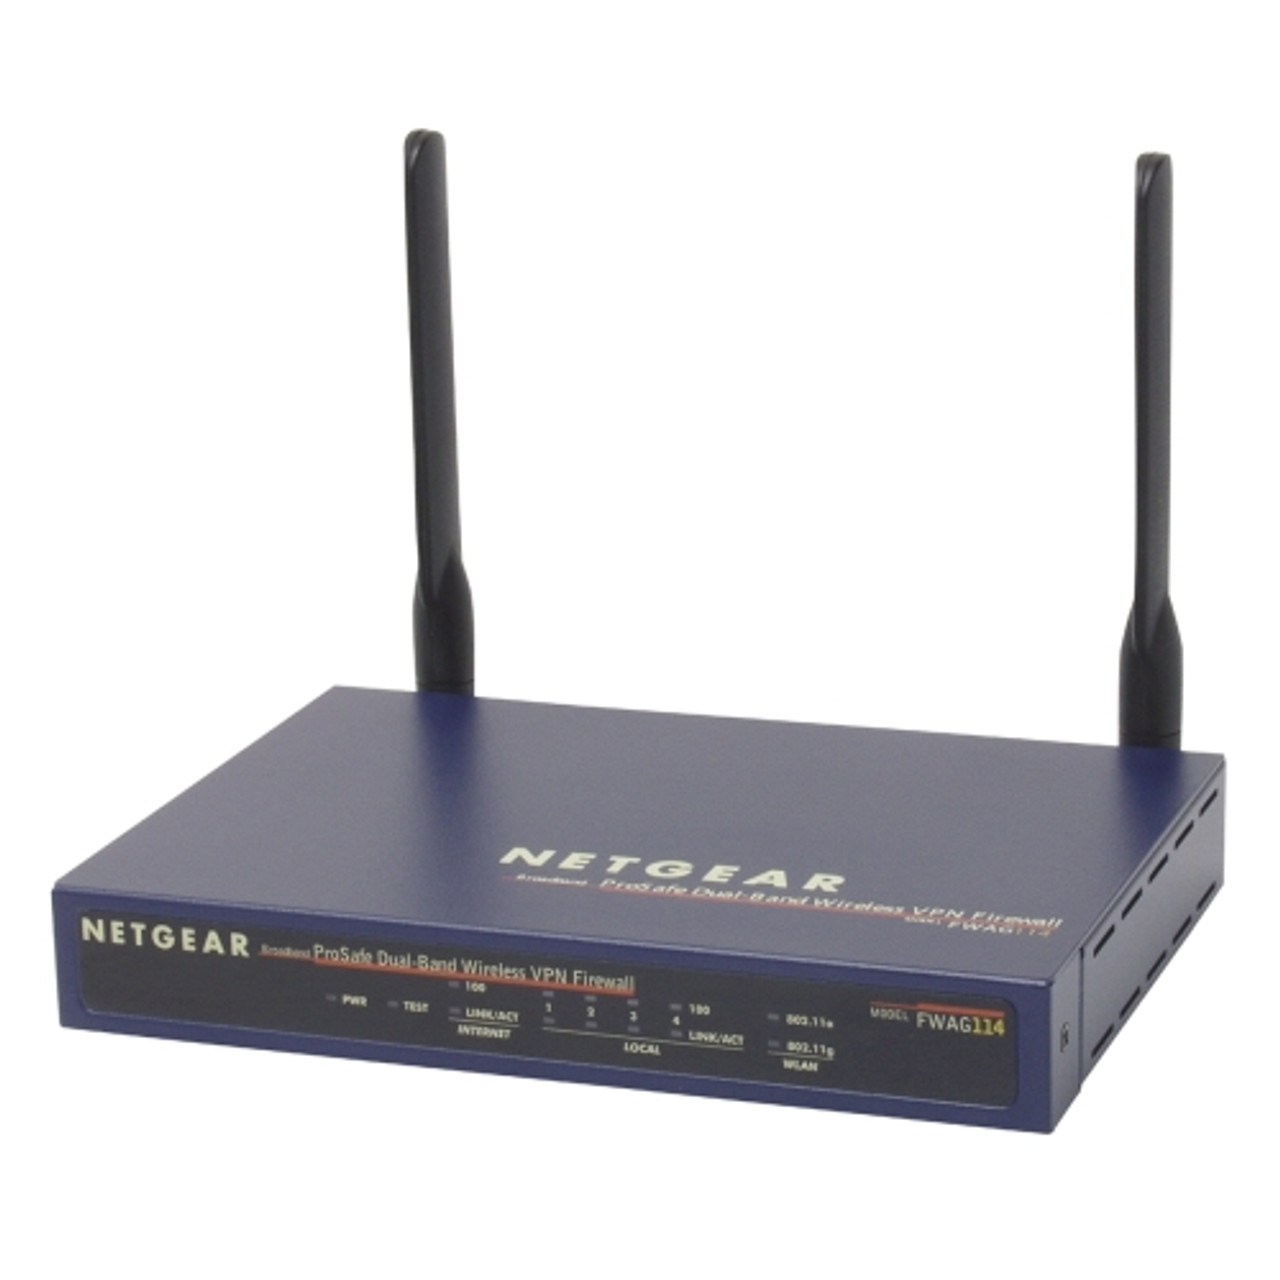 FWAG114NA Netgear FWAG114 Wireless VPN Firewall Router (Refurbished)